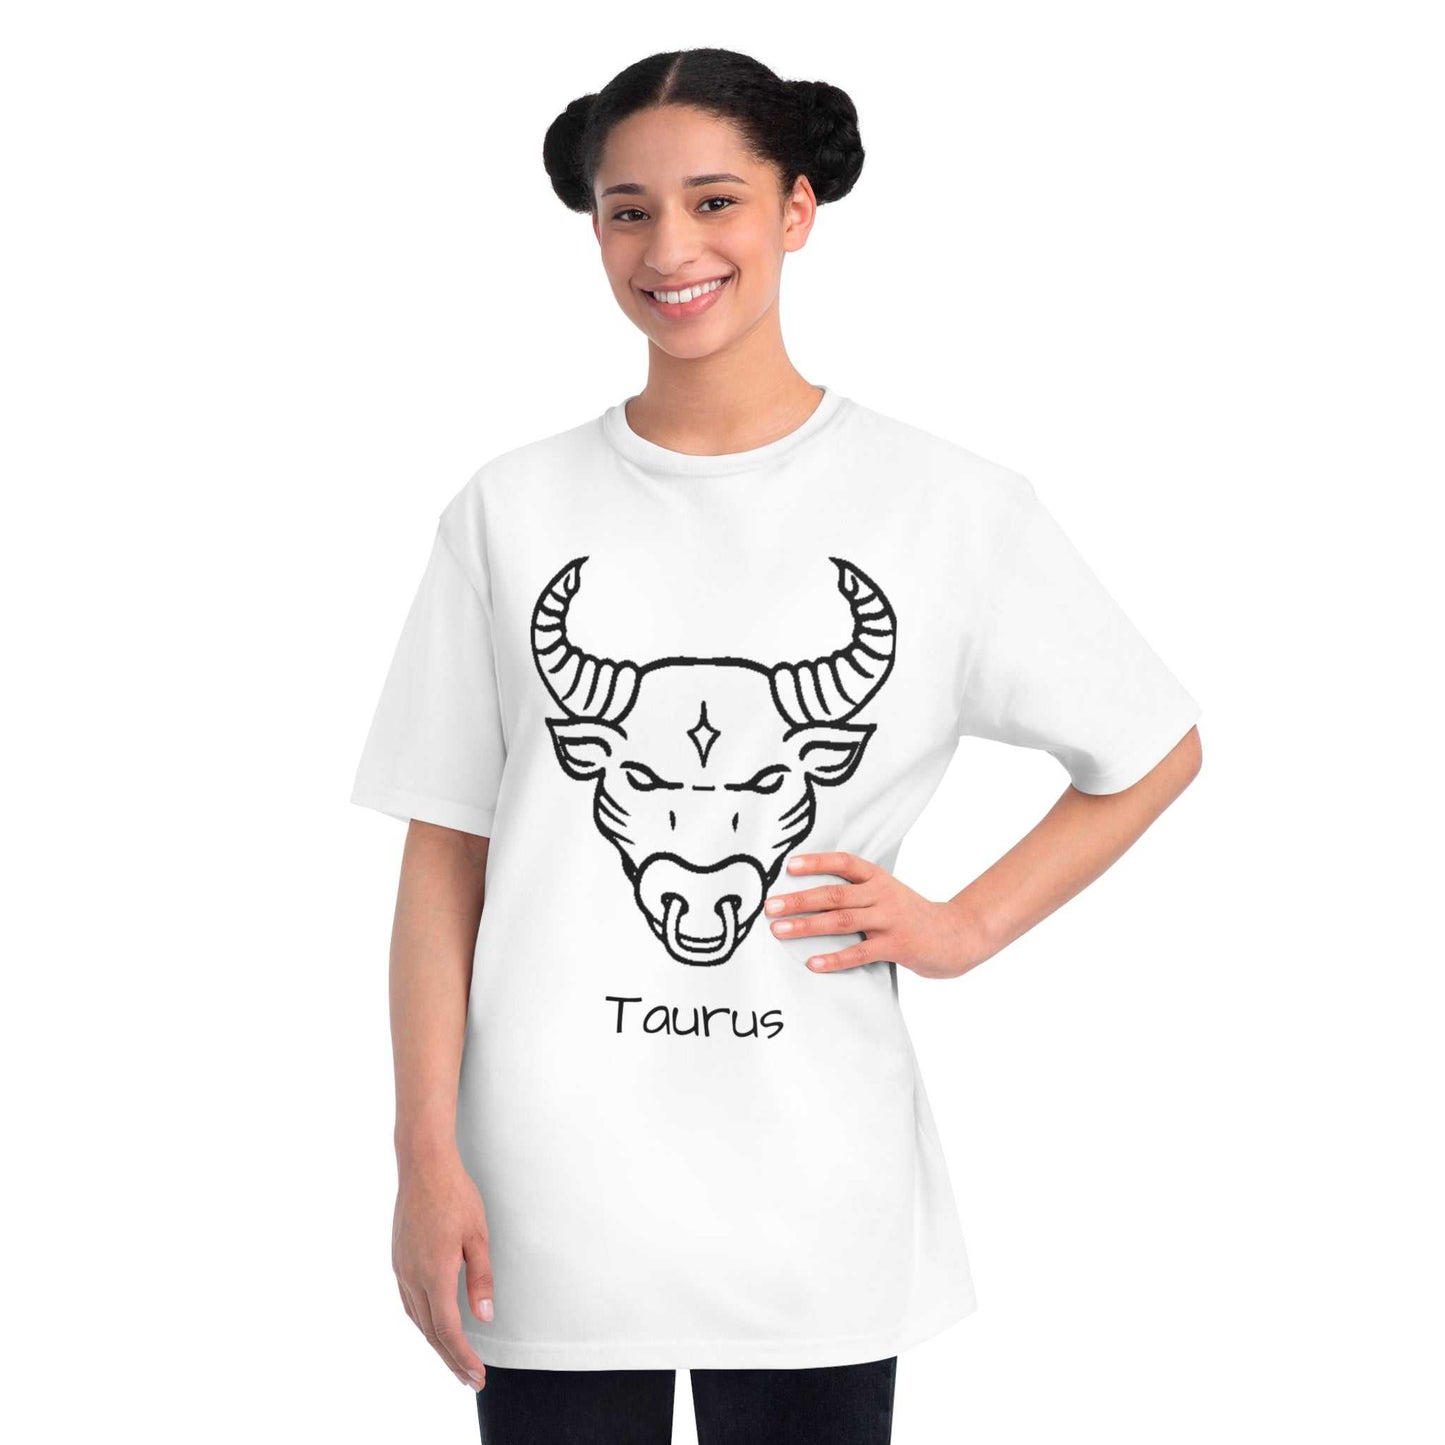 100% Organic Cotton T-shirts-Taurus shirts